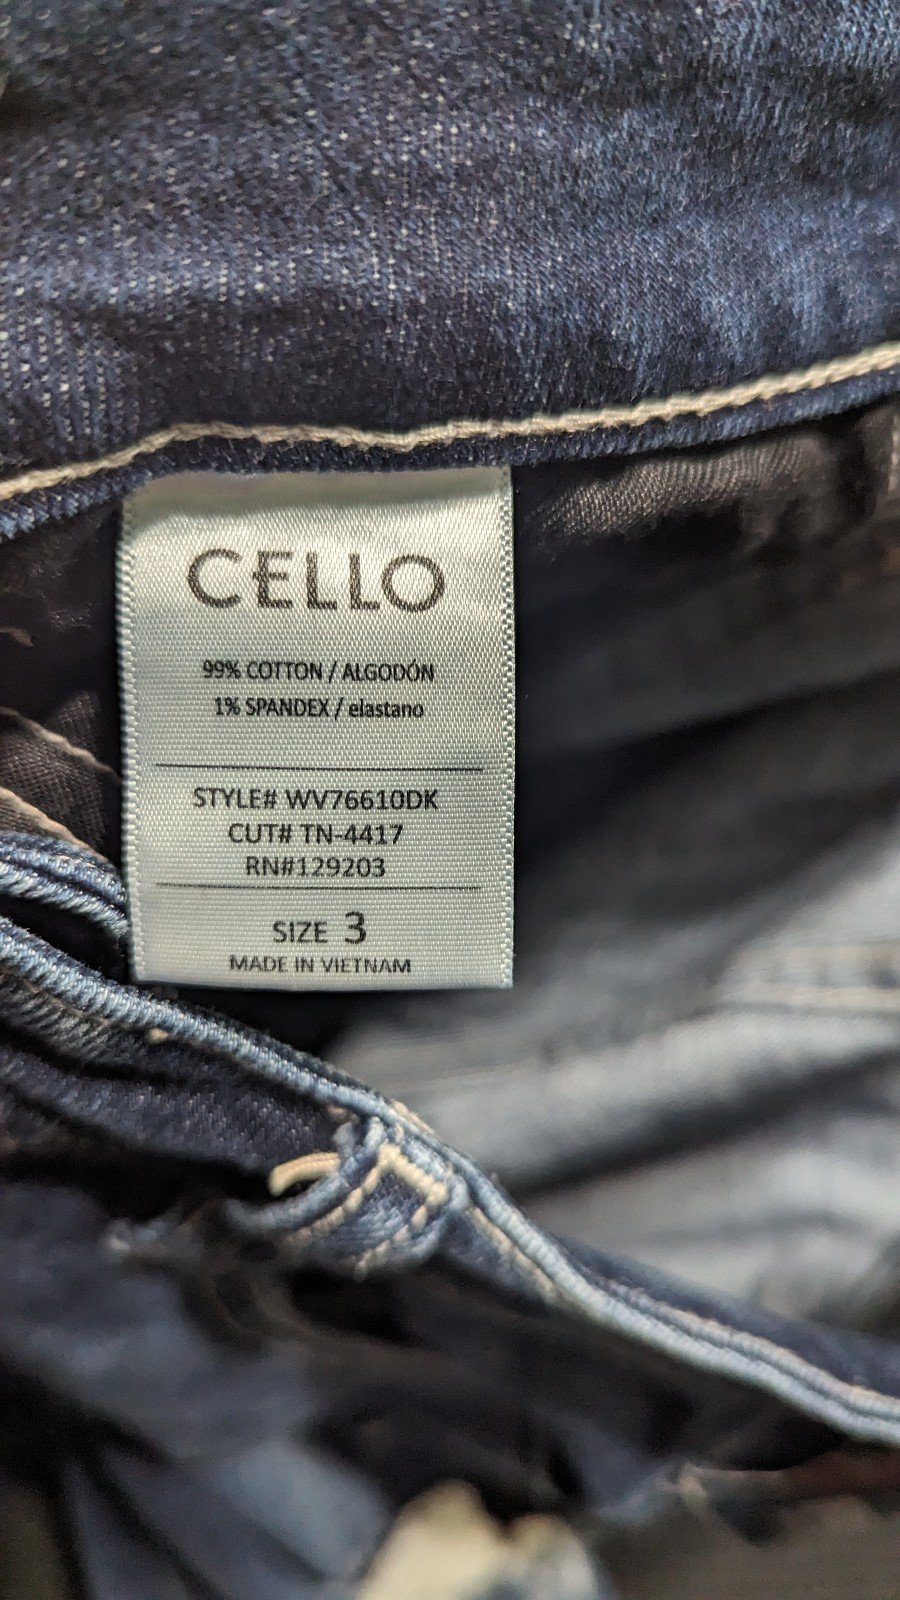 Personality cello jeans gus5W3Tye Store Online